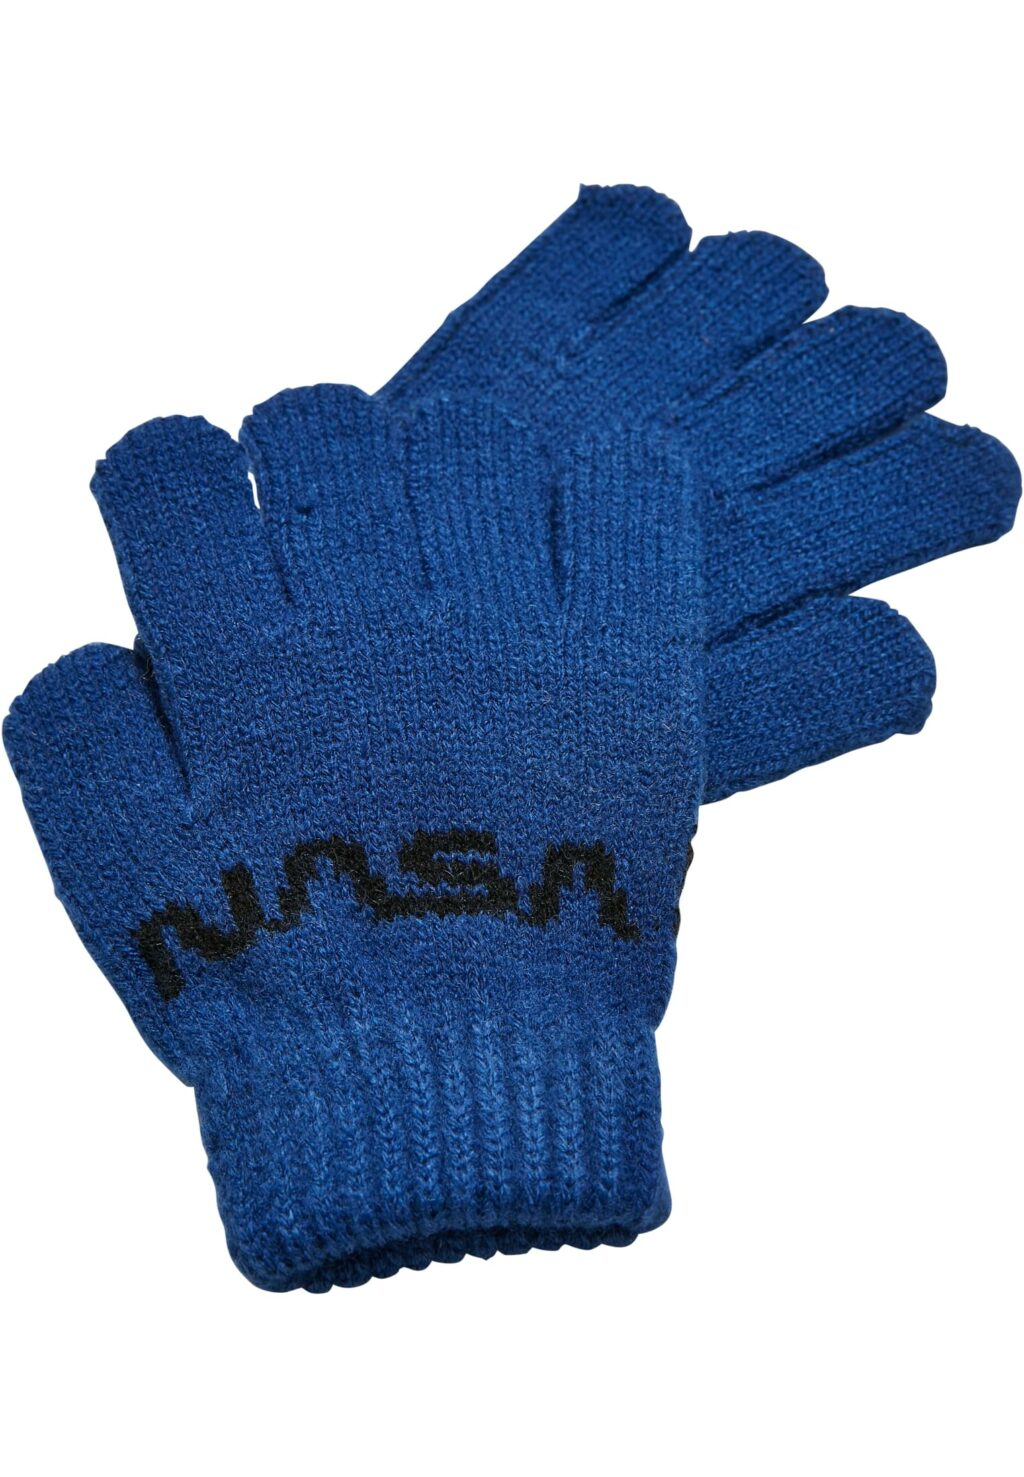 NASA Knit Glove Kids royal MTK2093